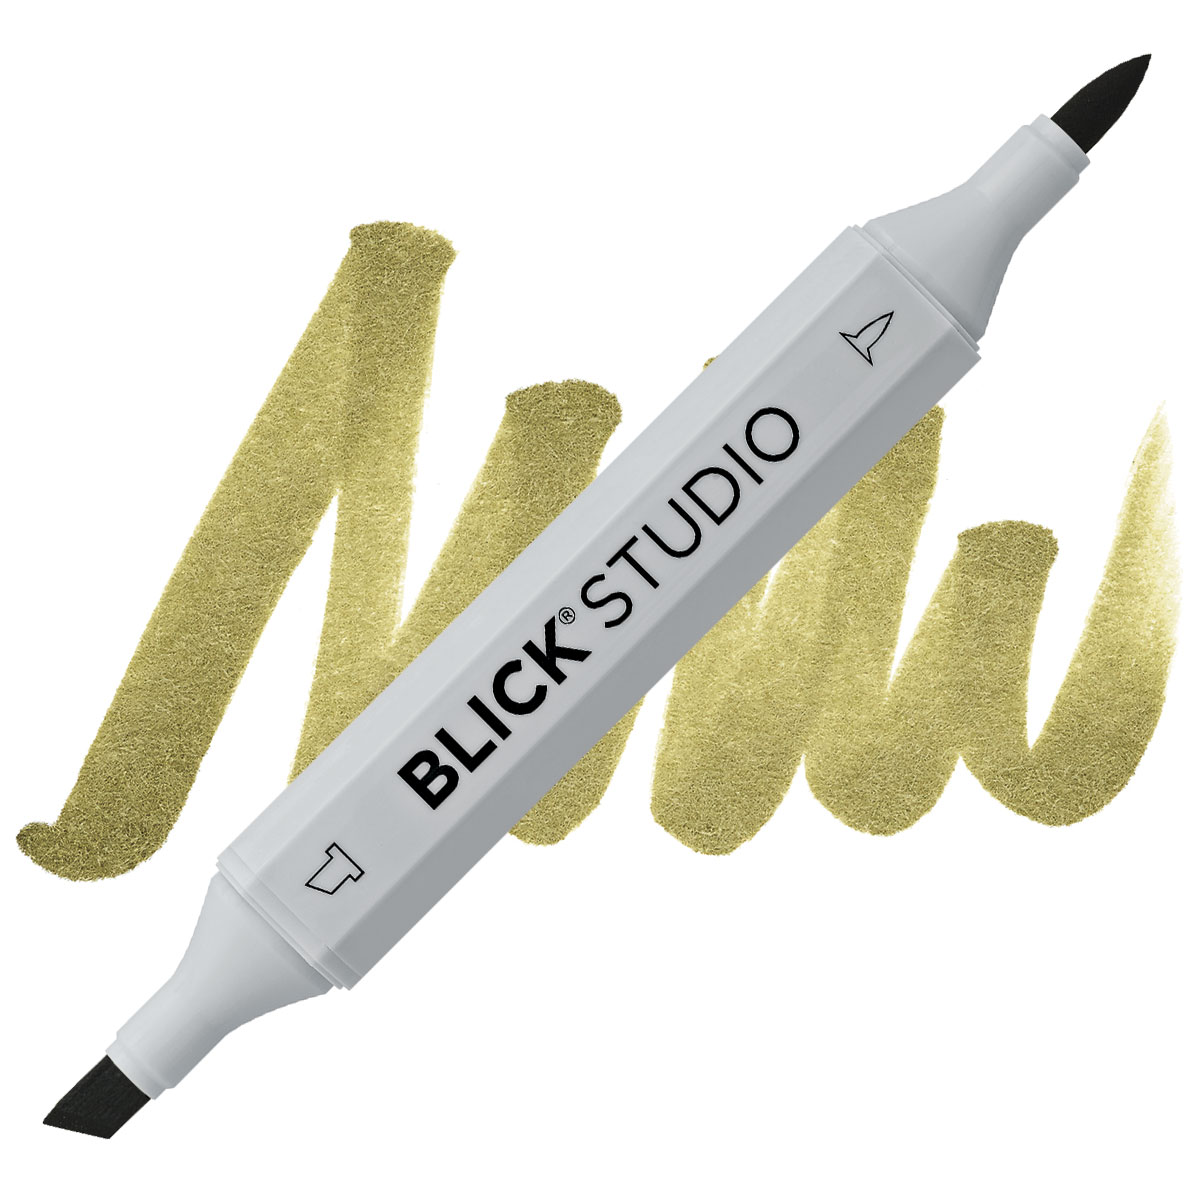 Blick Art Supply NotHaul- Copic Refills, Qor Watercolor, Blick Studio  Markers 